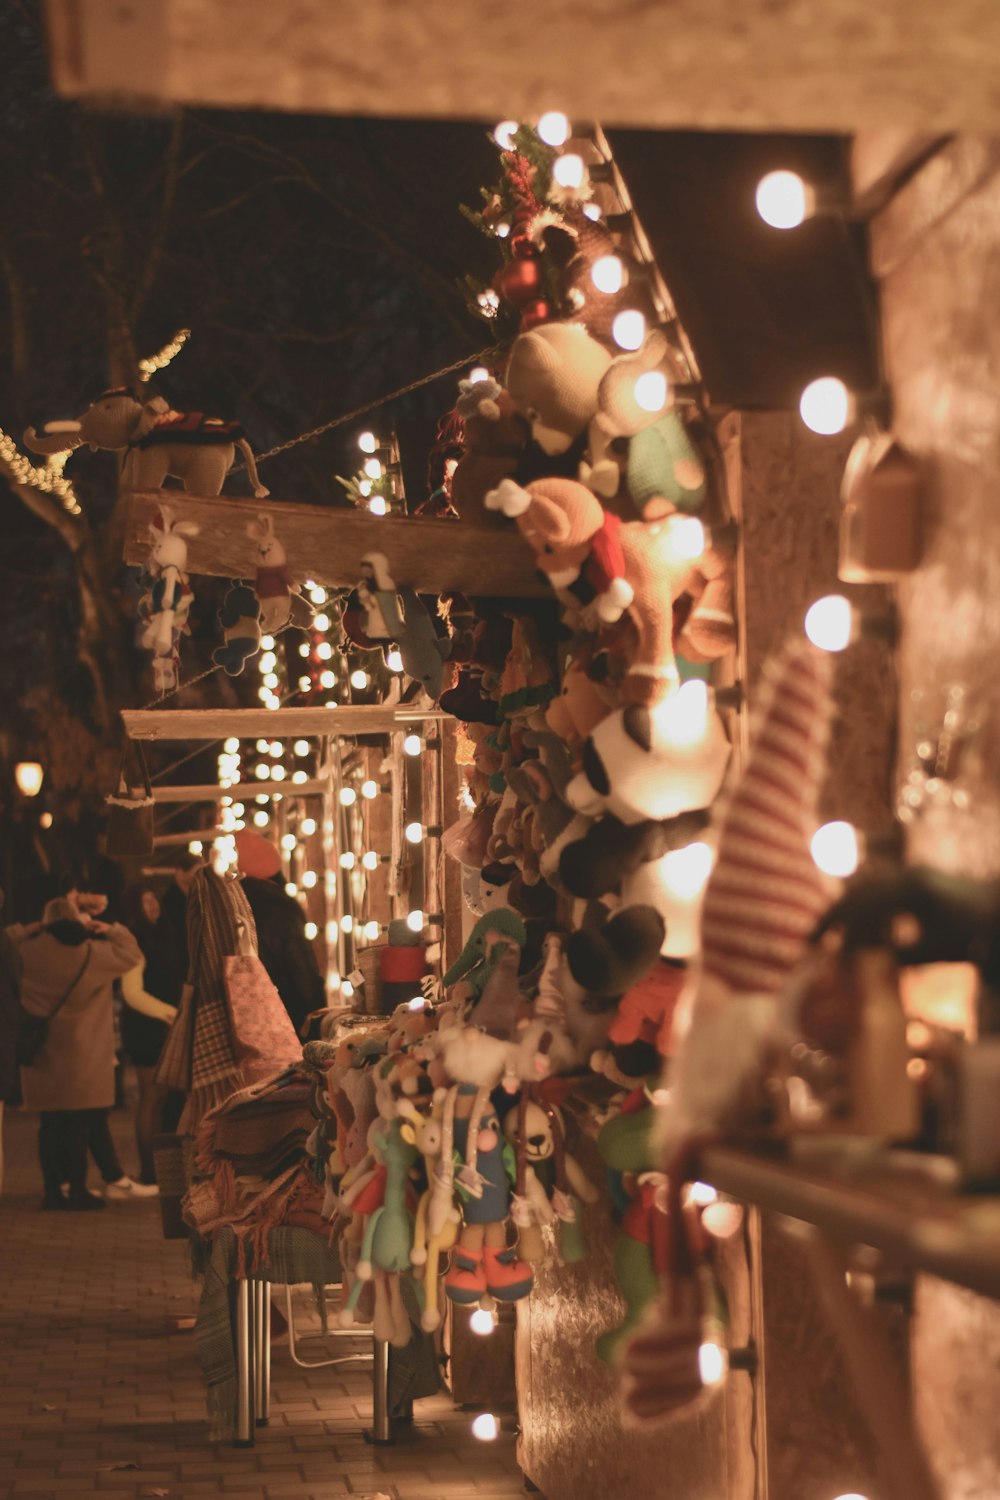 a christmas display with lights and stuffed animals